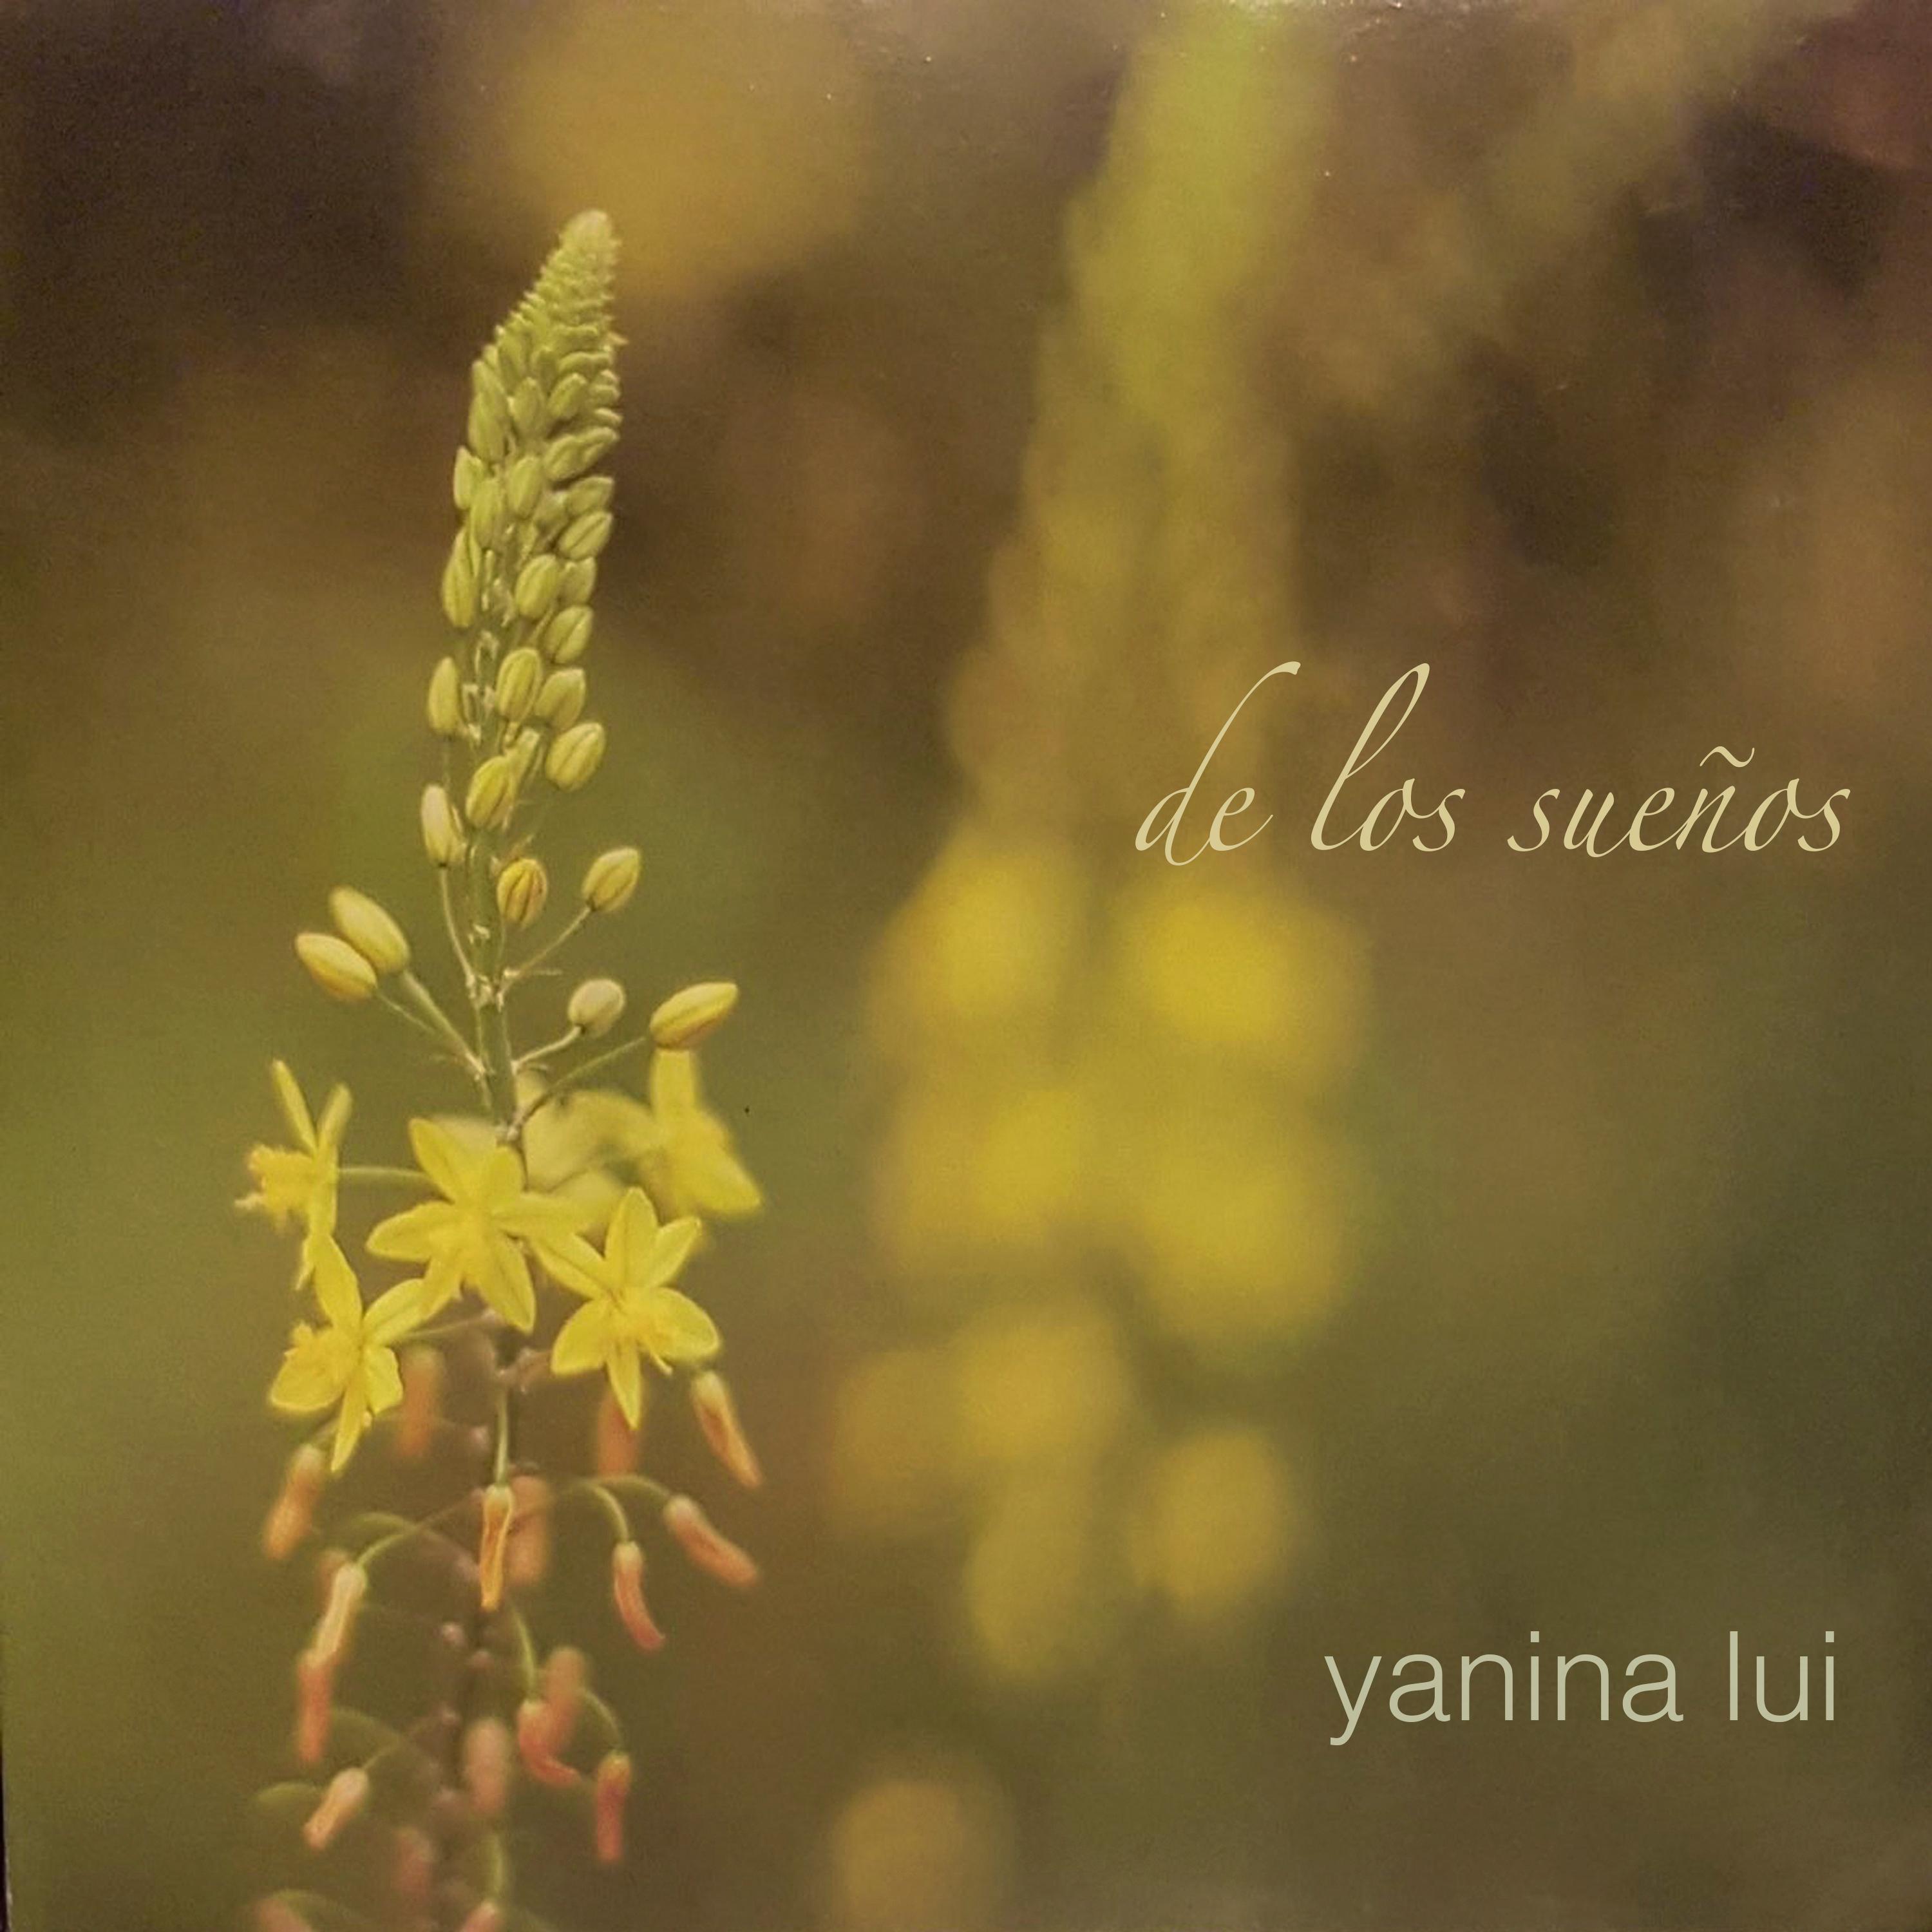 Yanina Lui - A puro fierro (feat. Juan Falú)